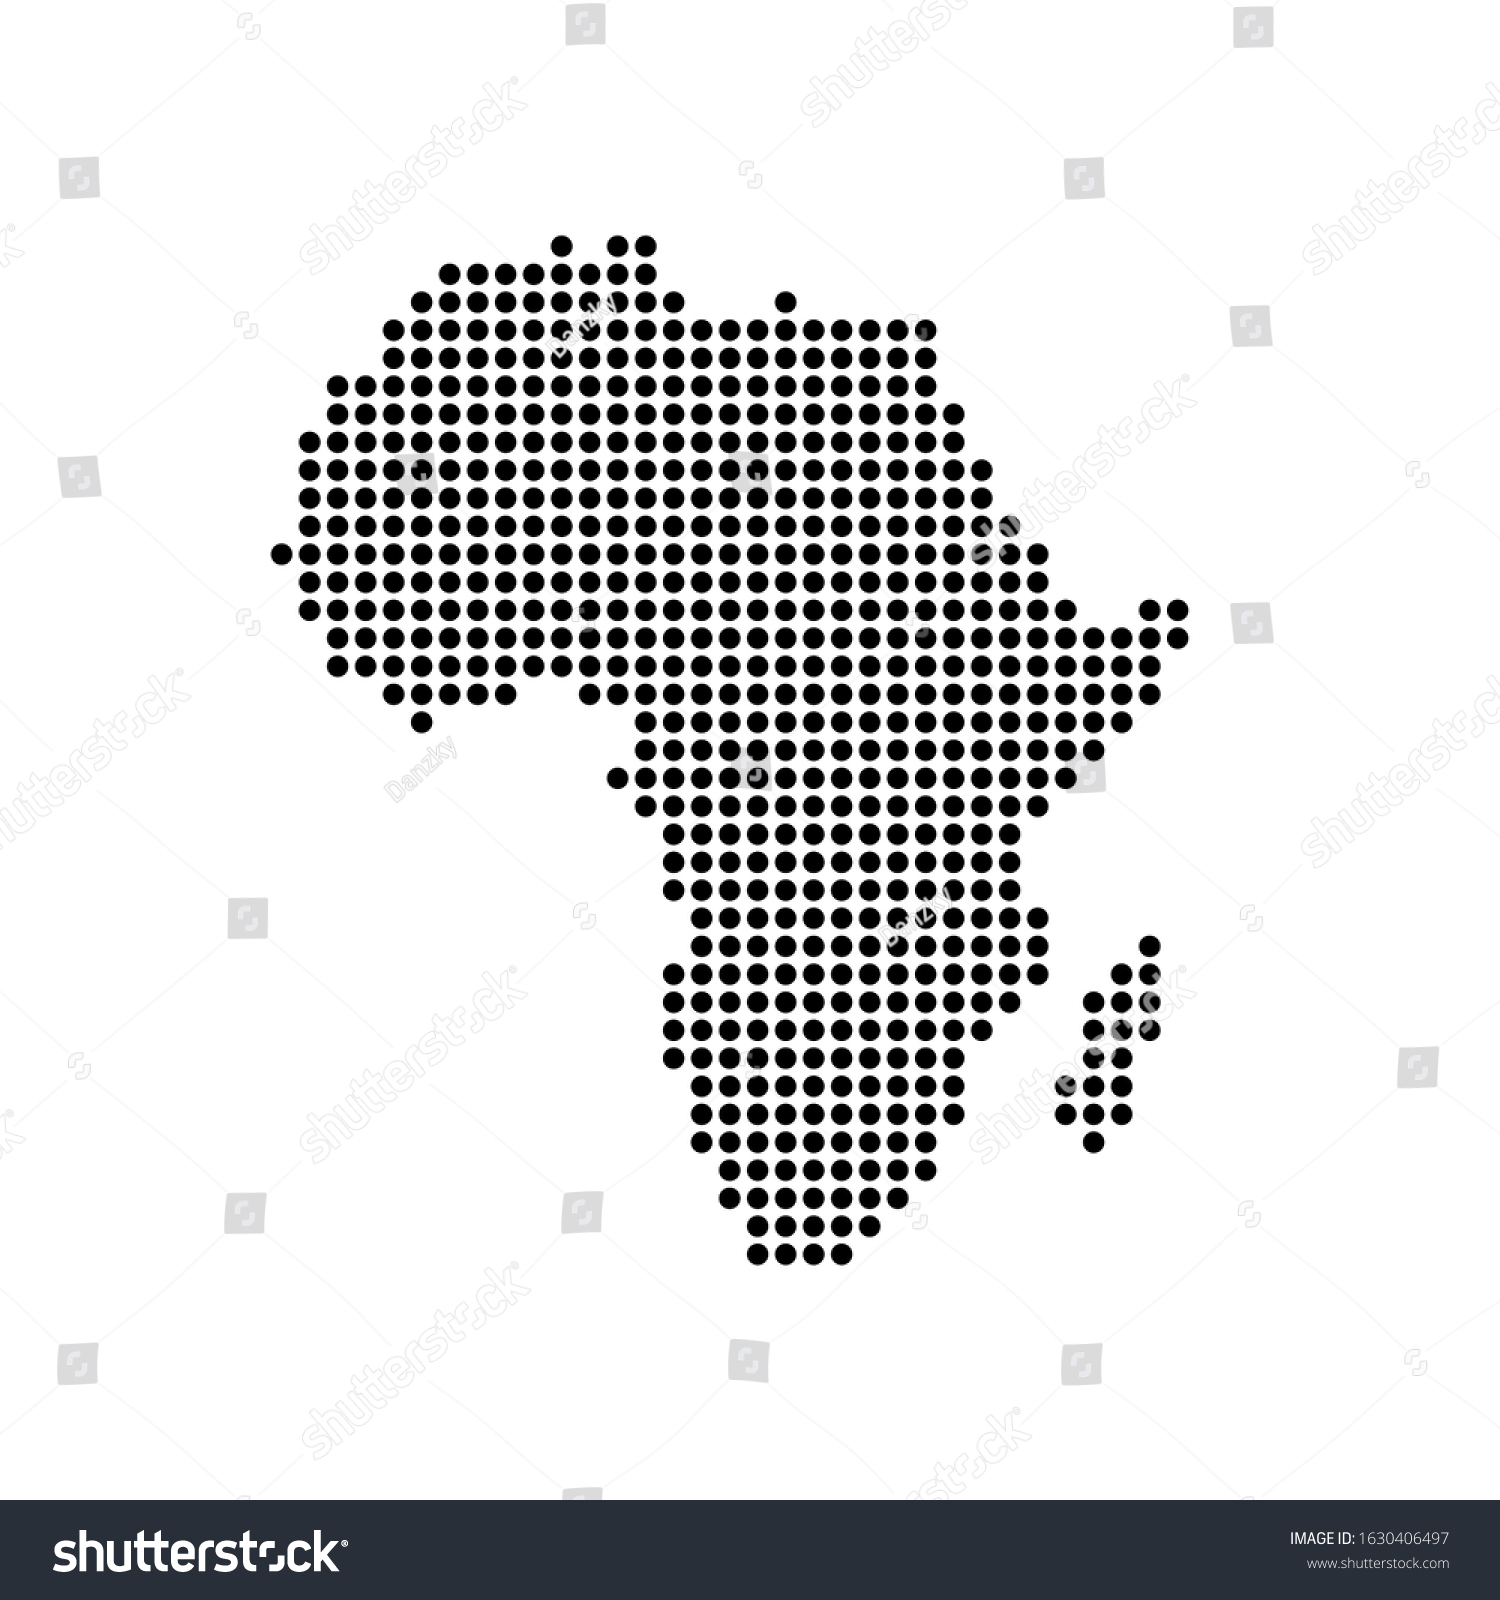 Africa Blank Map Vector Africa Digital เวกเตอร์สต็อก ปลอดค่าลิขสิทธิ์ 1630406497 Shutterstock 